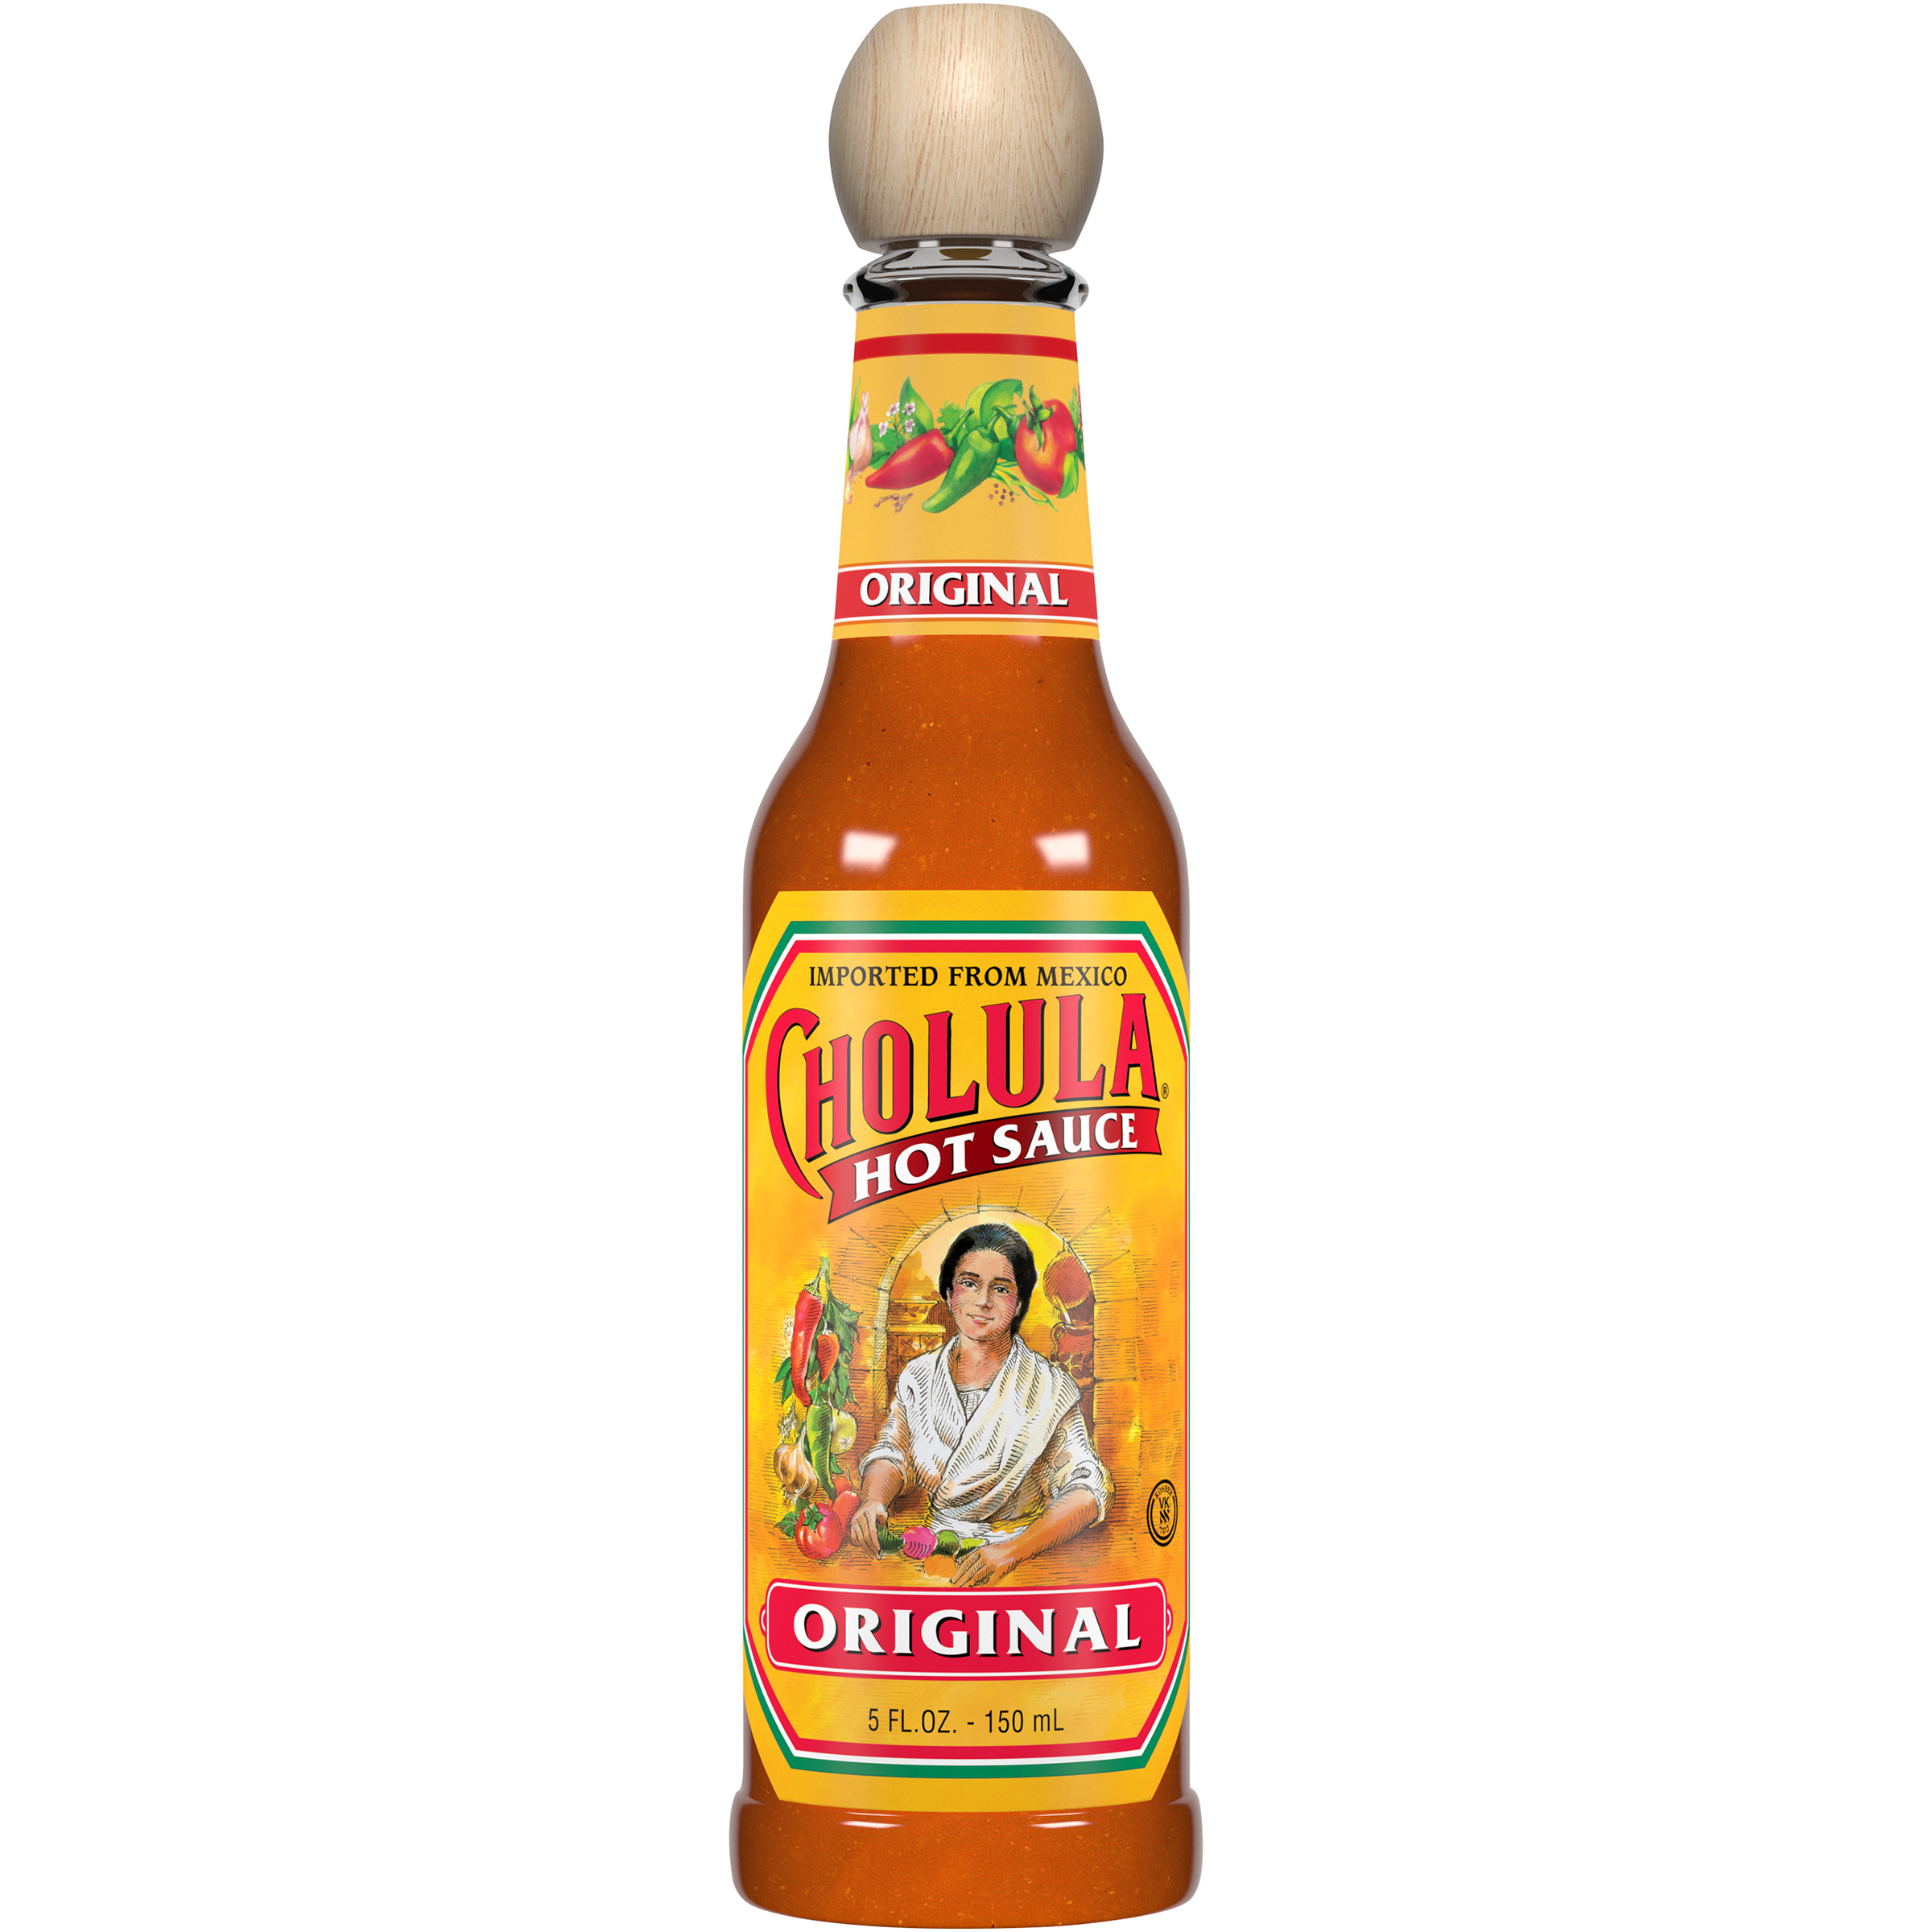 Cholula Original Hot Sauce 5 fl. oz. Bottle